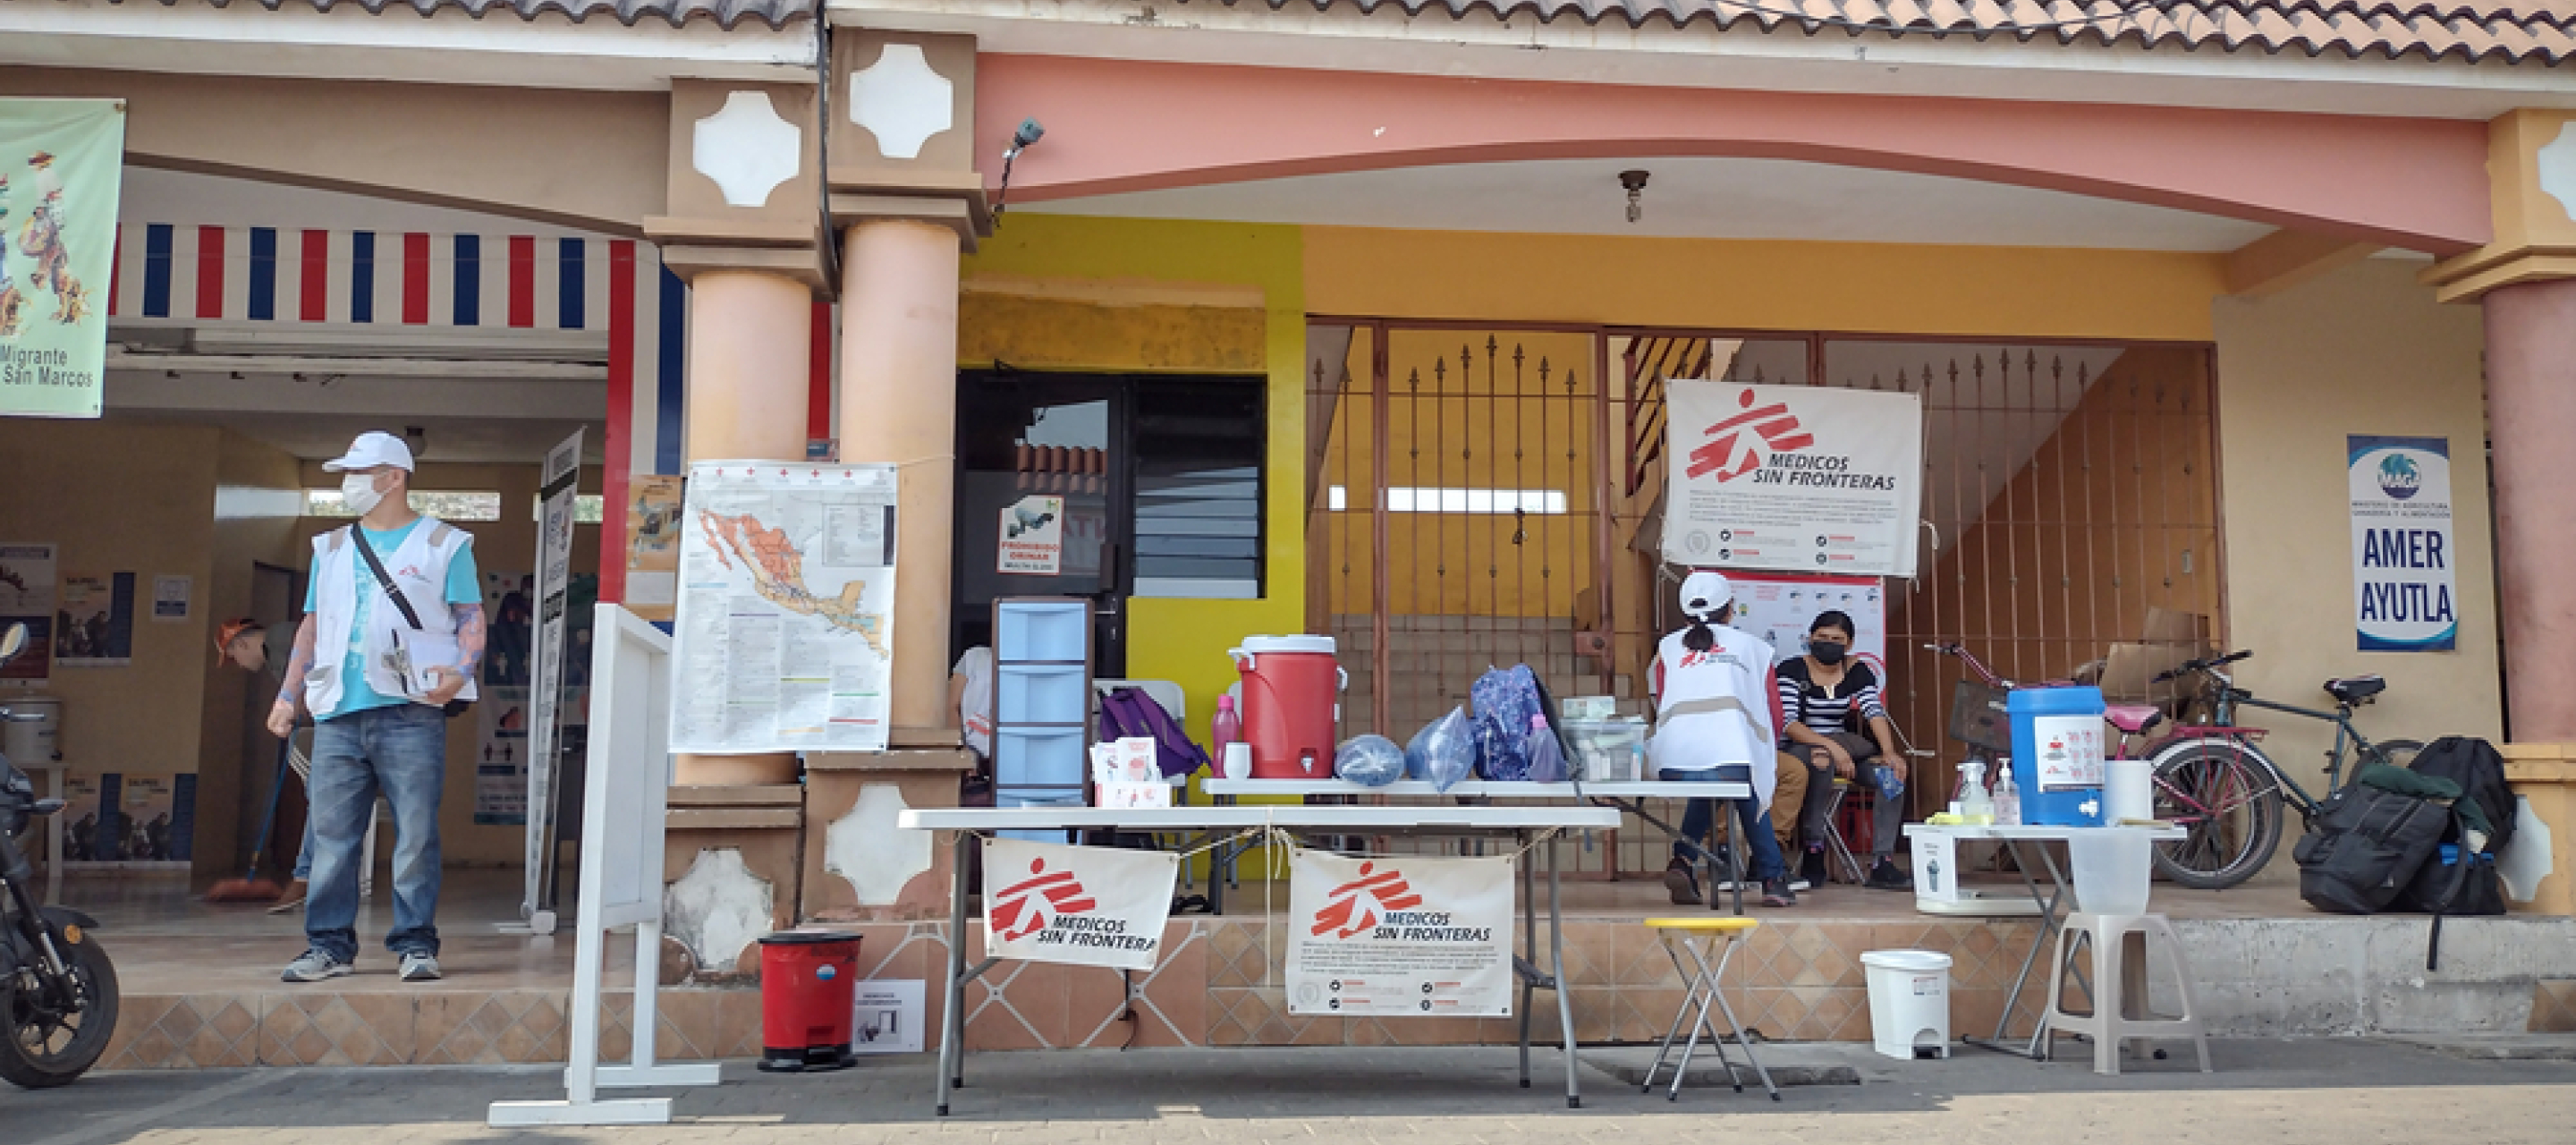 Medizinische Hilfe Busbahnhof Migrationsroute Guatemala